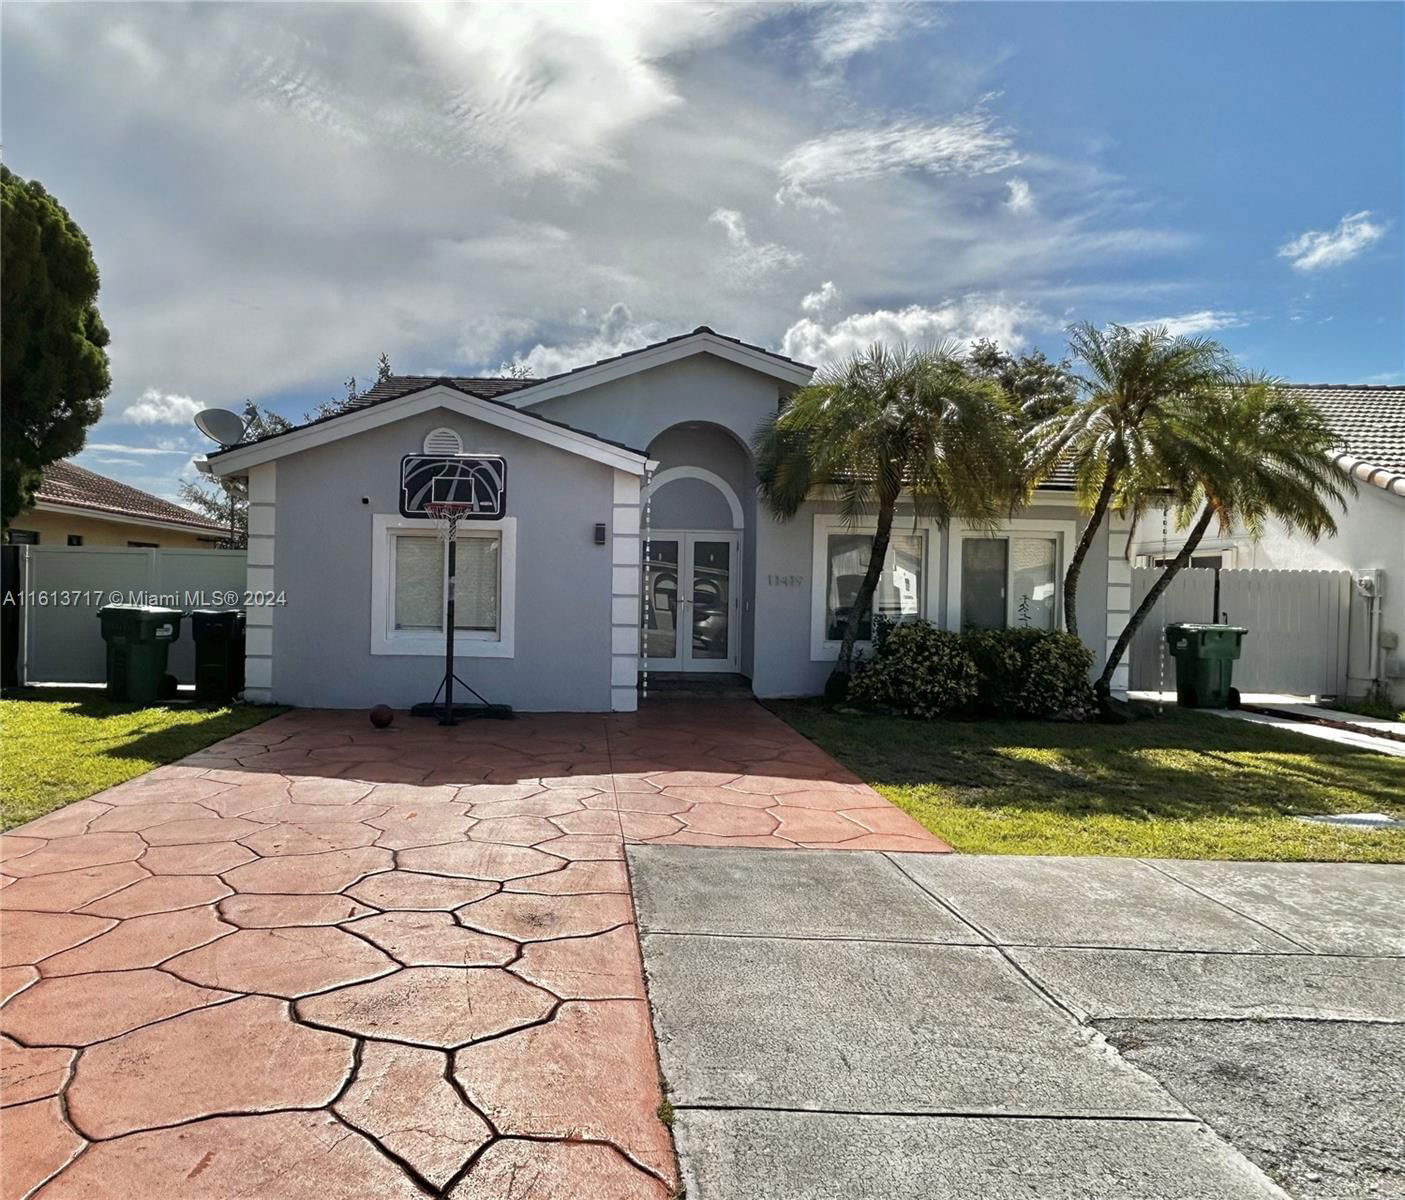 Real estate property located at 11419 143rd Ct, Miami-Dade County, CALIFORNIA HILLS, Miami, FL